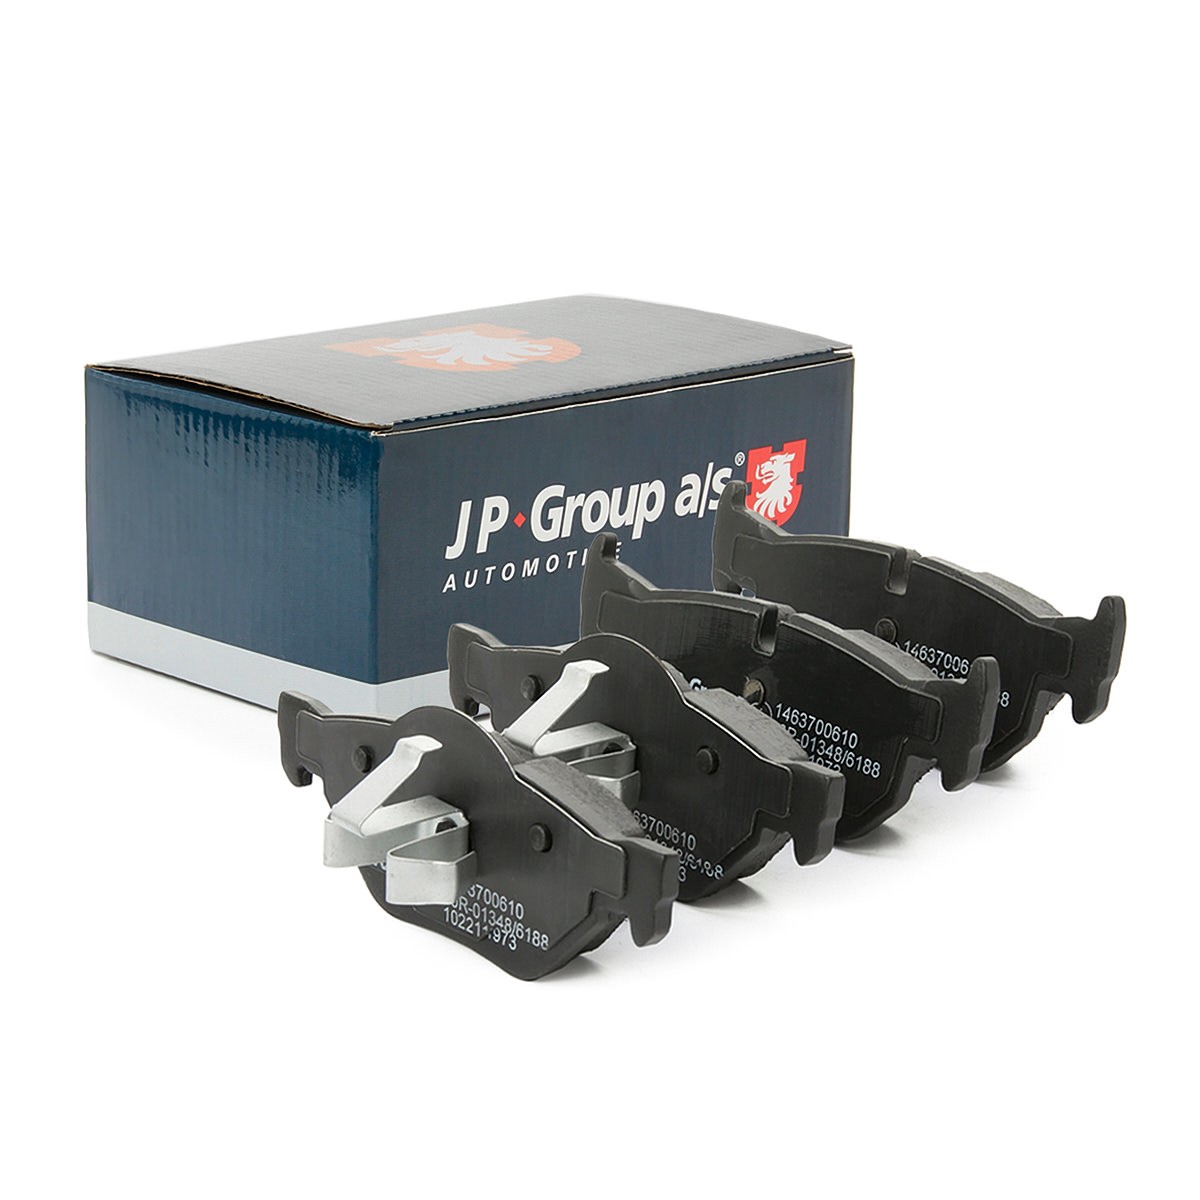 JP GROUP Brake pad kit 1463700610 for BMW 1 Series, 3 Series, X1